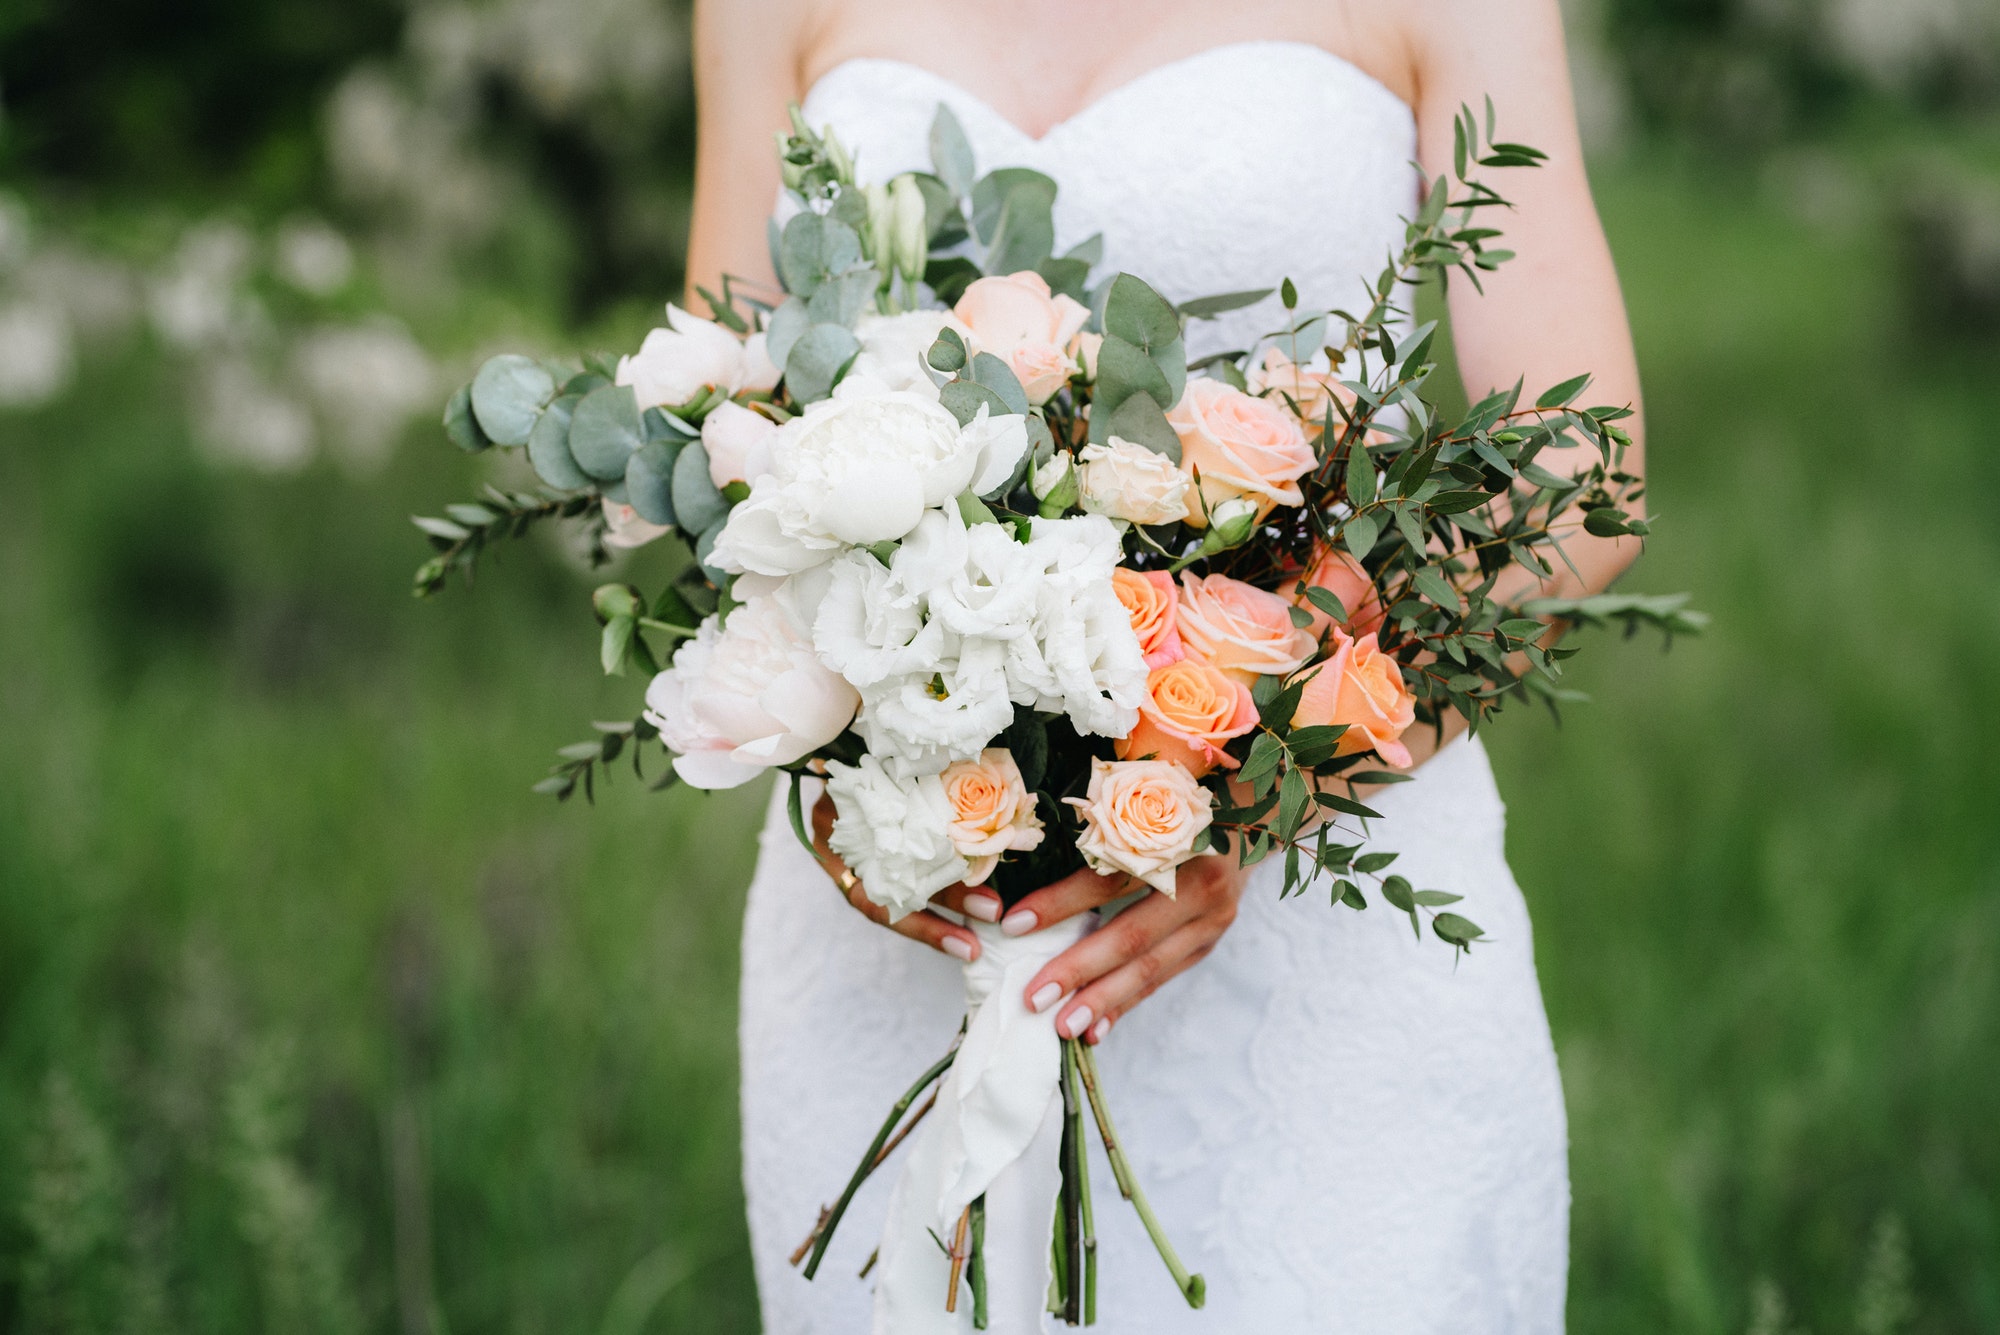 elegant wedding bouquet of fresh natural flowers